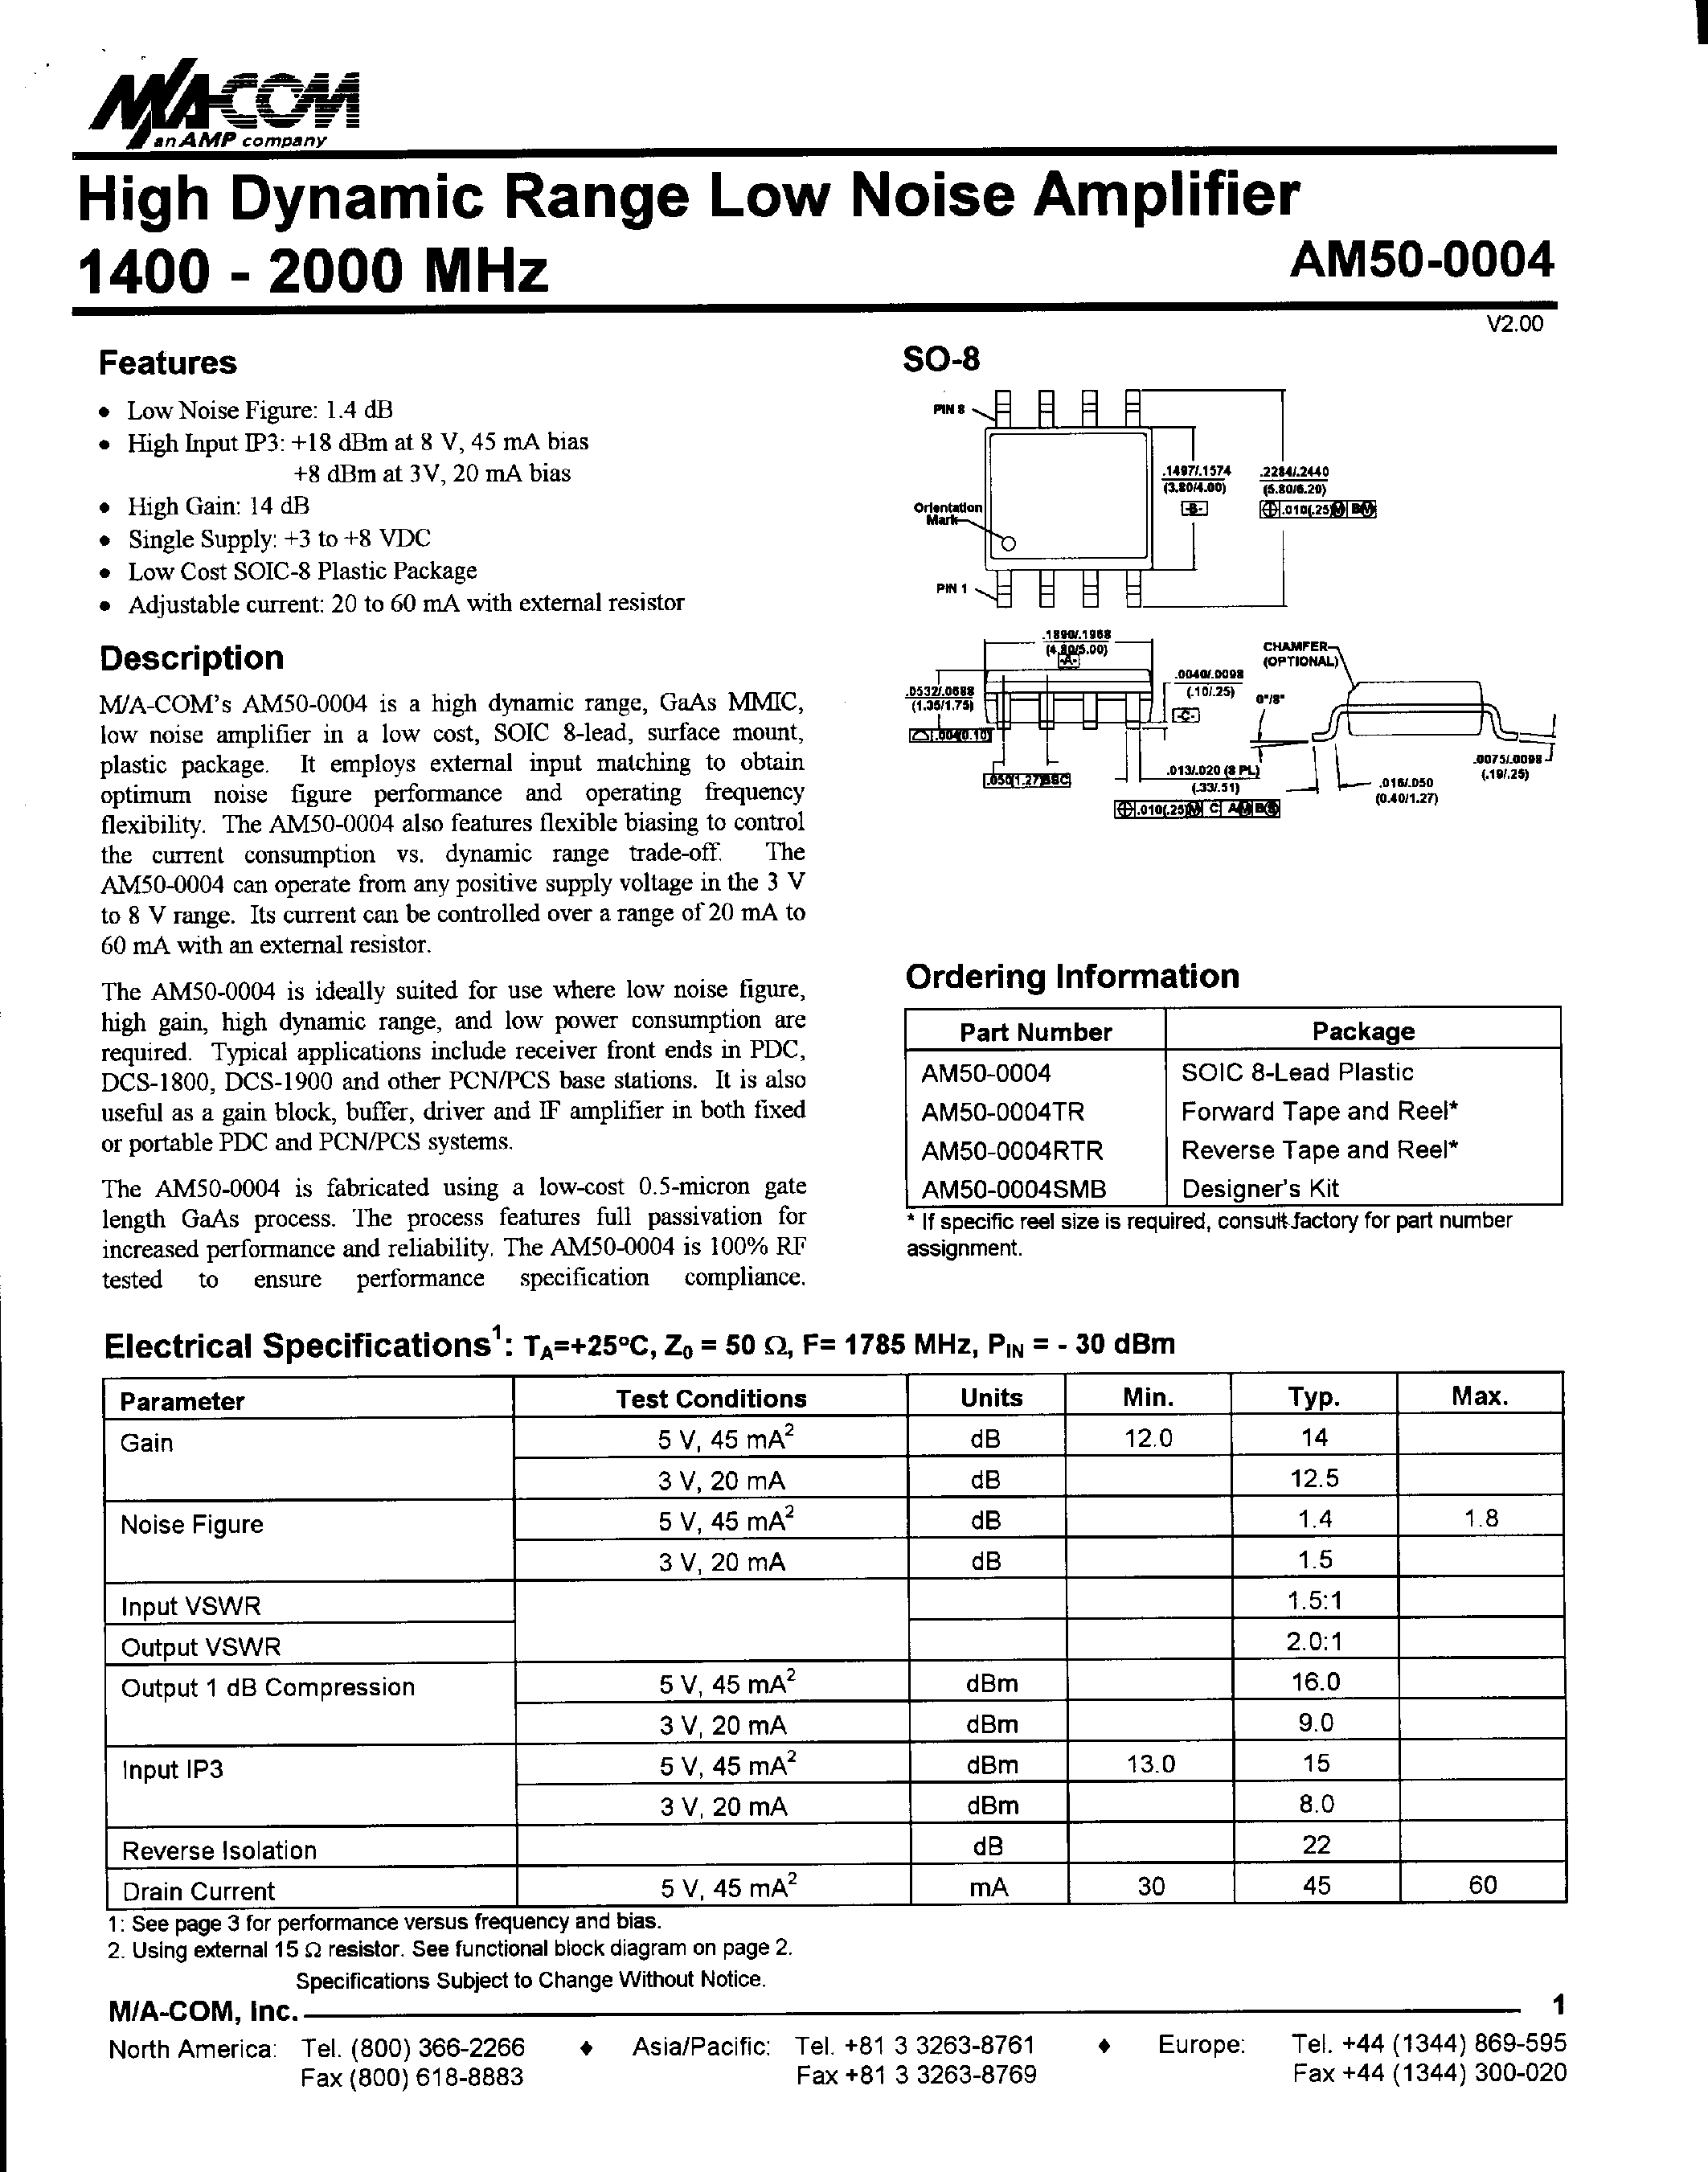 Datasheet AM50-0004SMB - High Dynamic Range Low Noise Amplifier 1400-2000 MHz page 1